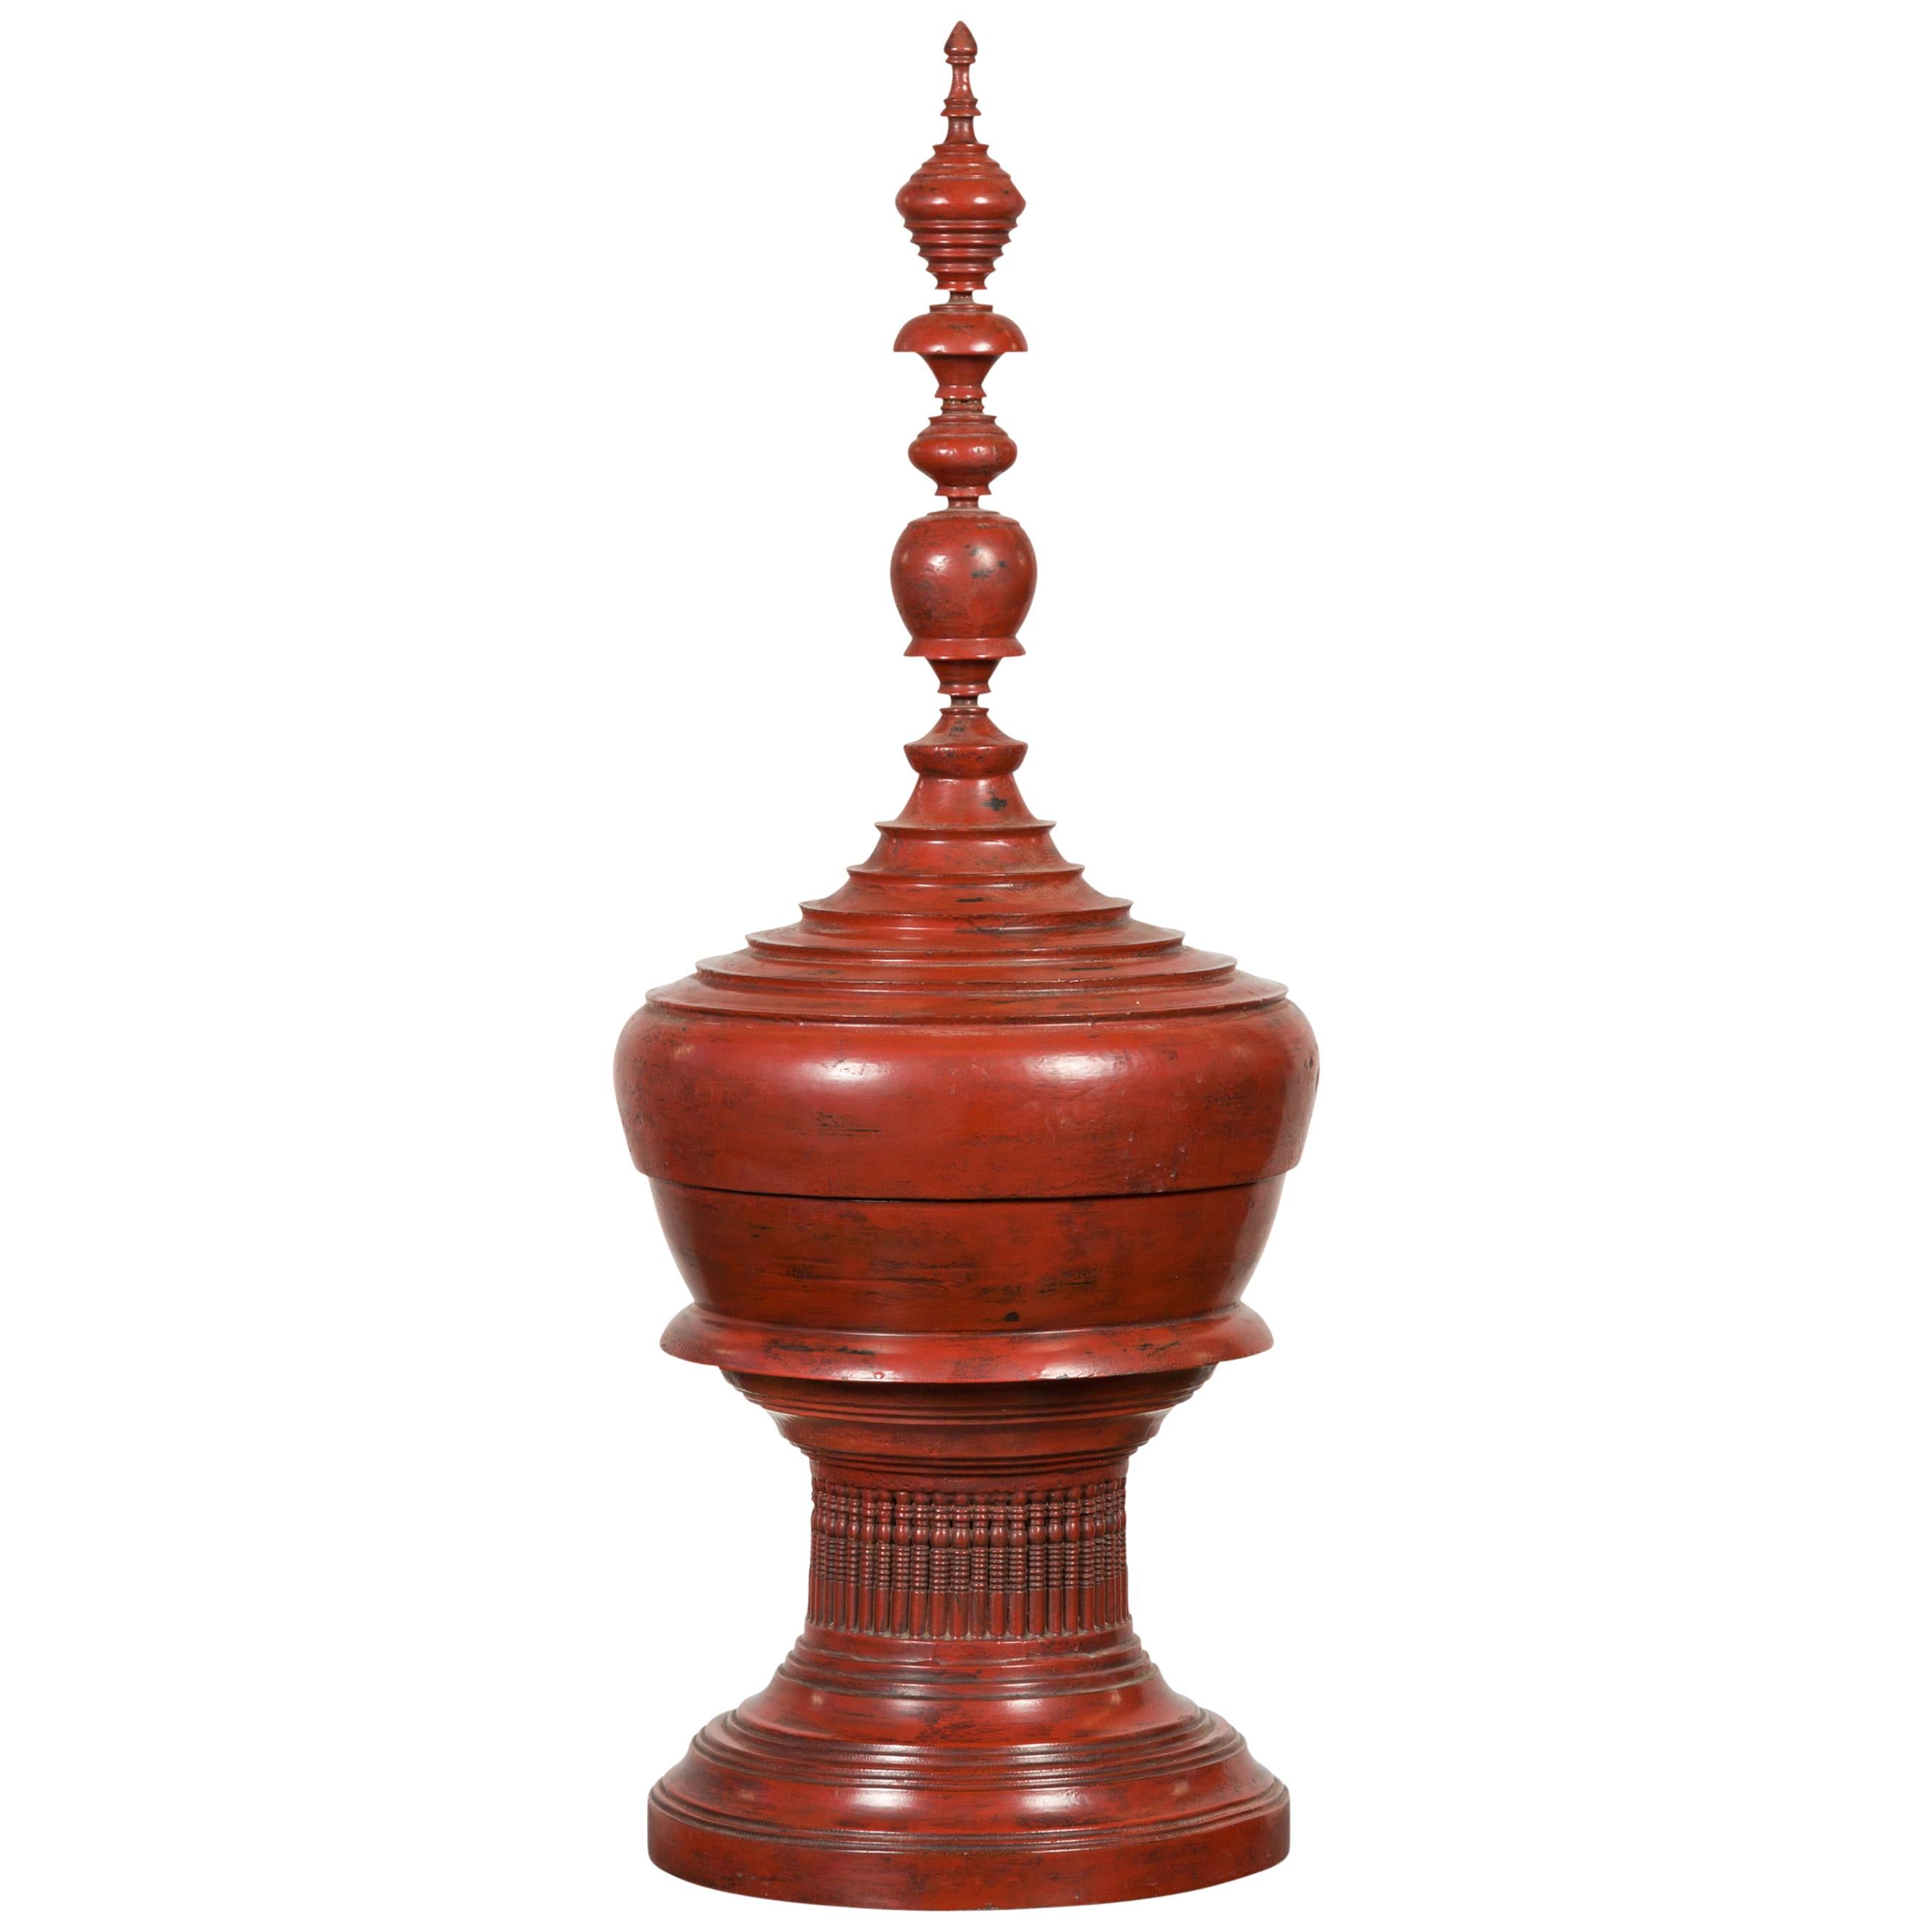 Burmese 19th Century Cinnabar Palembang Lacquer Lidded Temple Offering Bowl